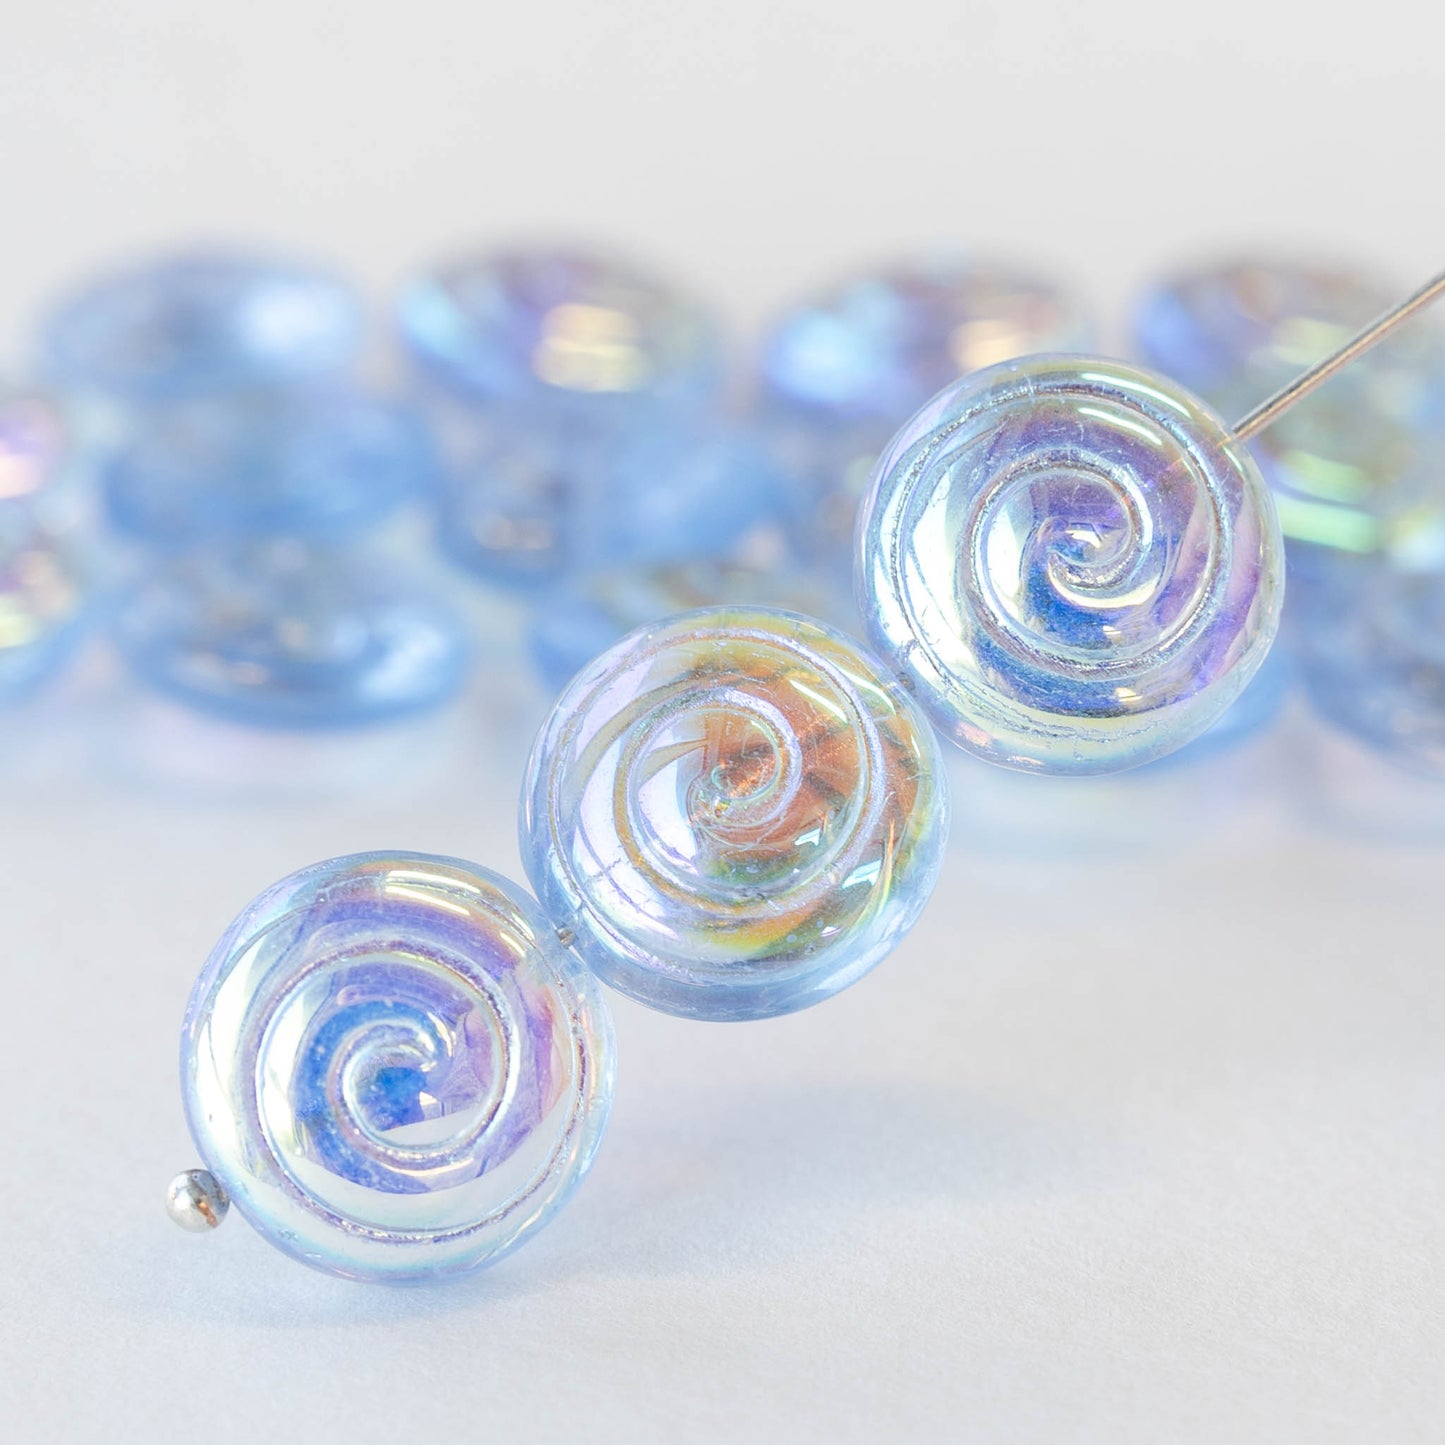 13mm Spiral Coin Beads - Light Blue AB - 10 beads